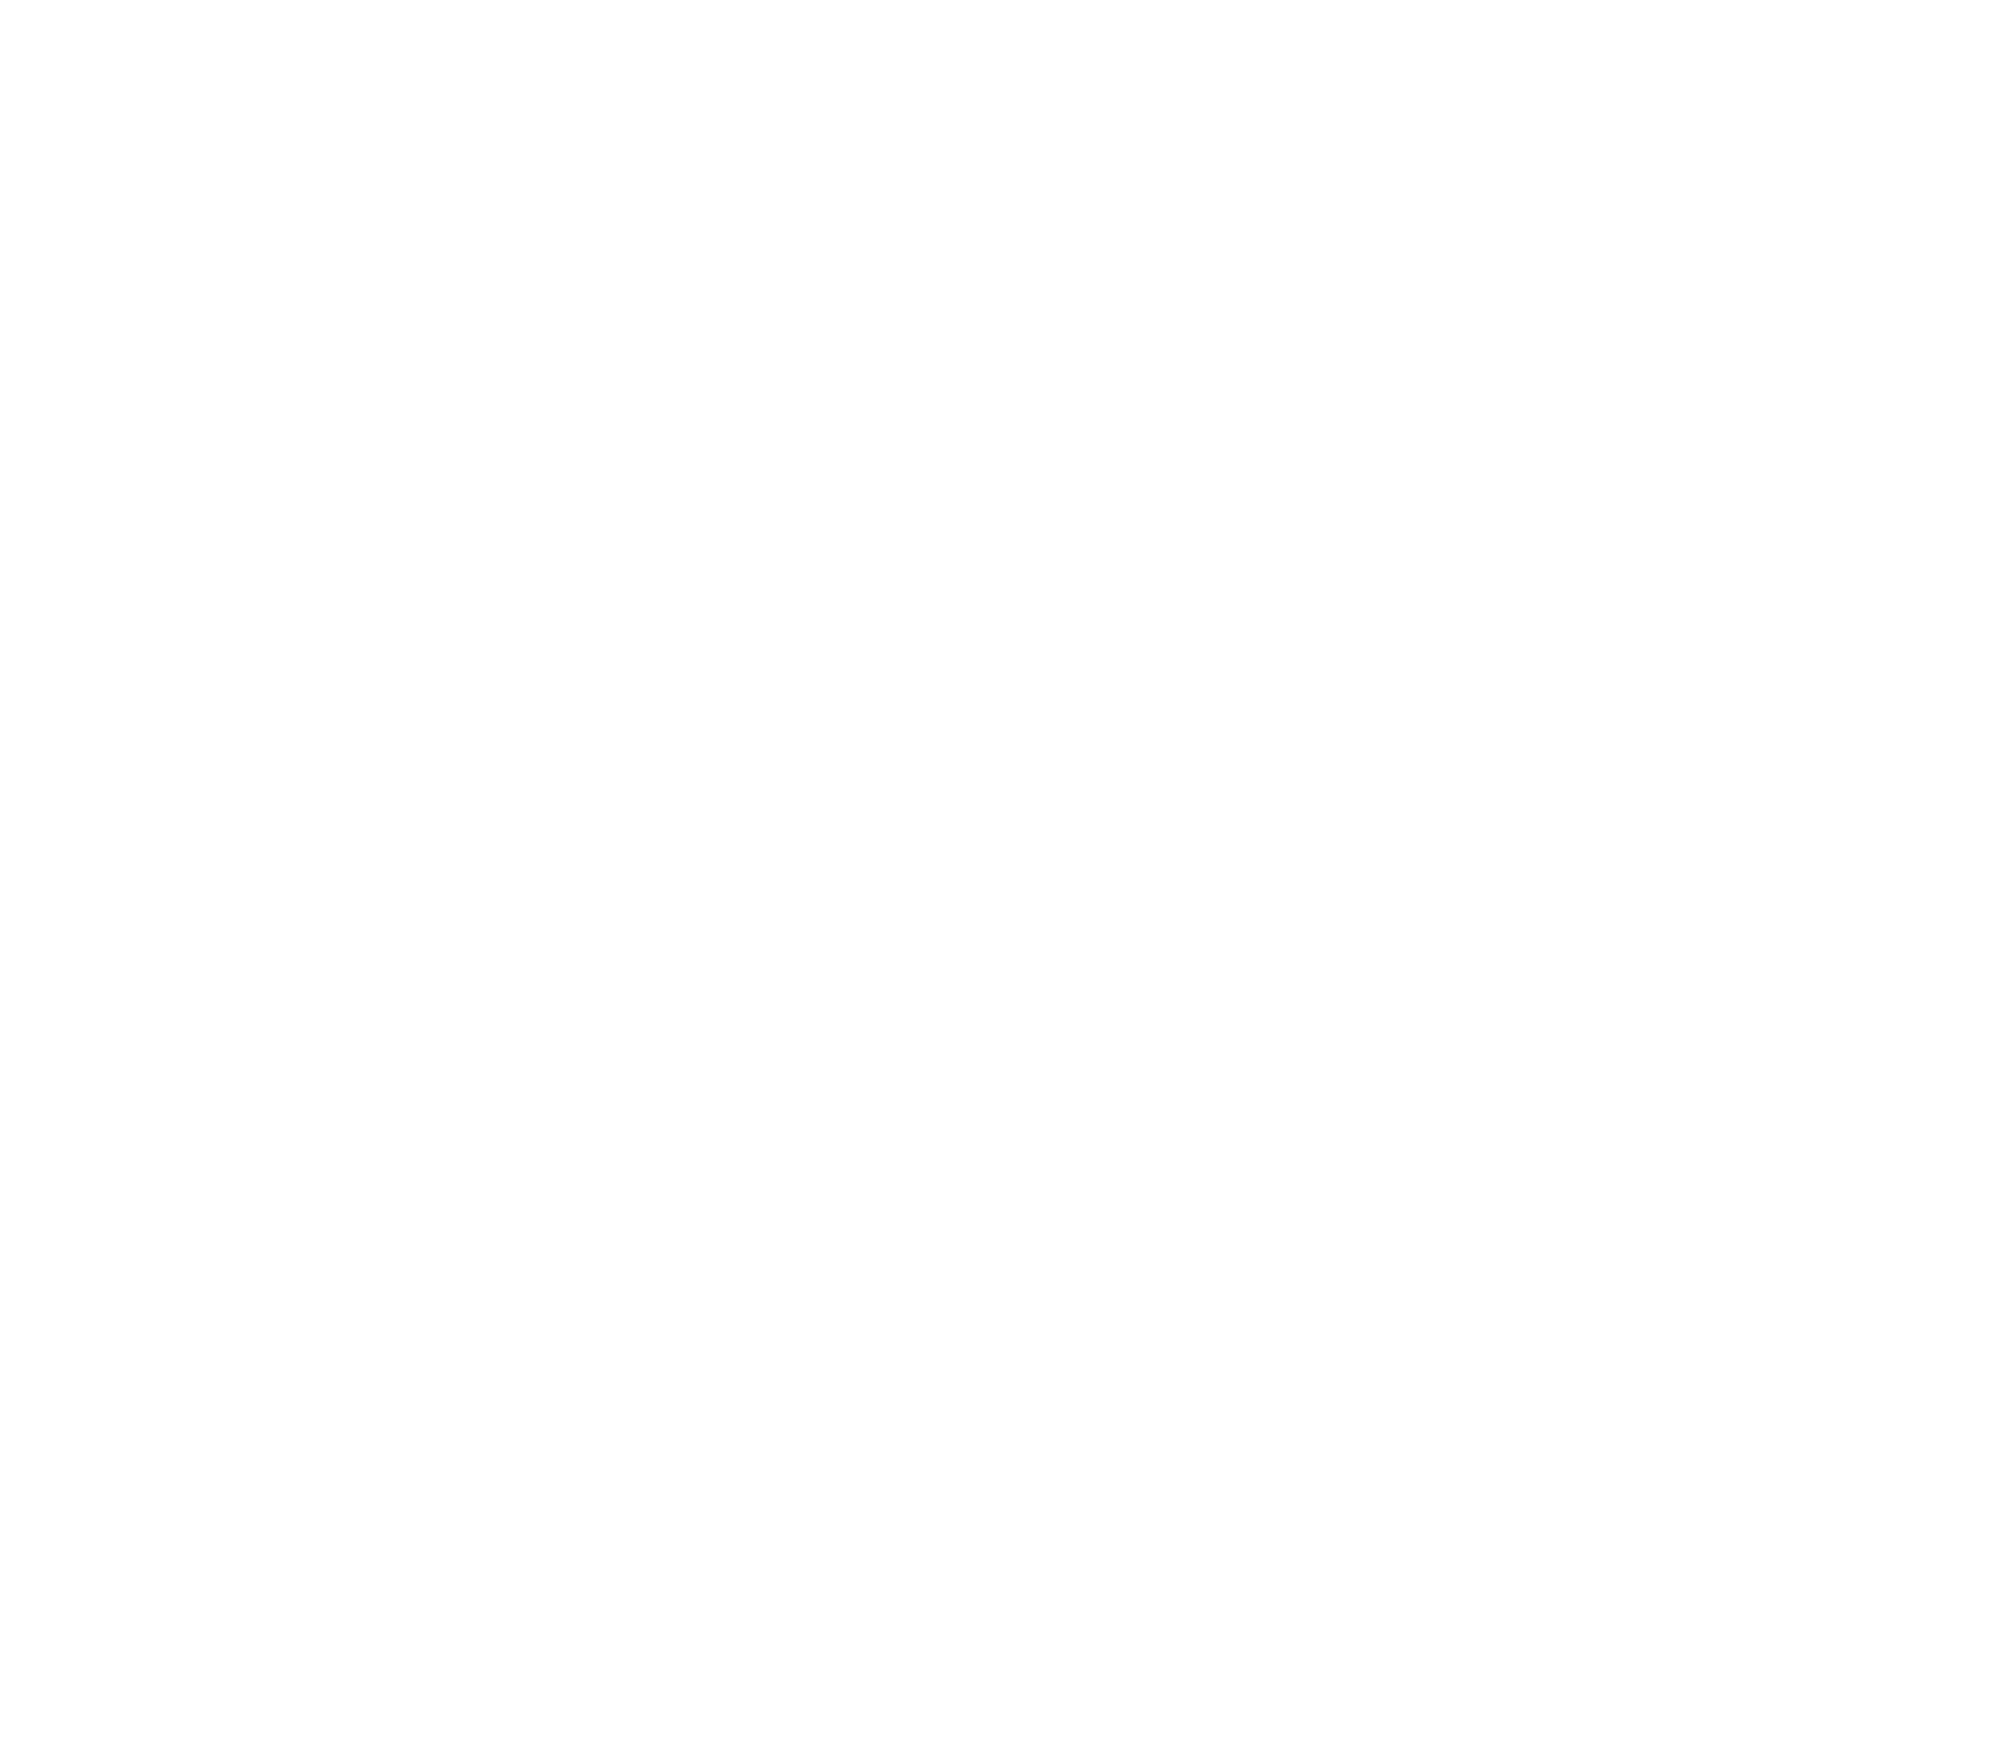 Labranda hotels